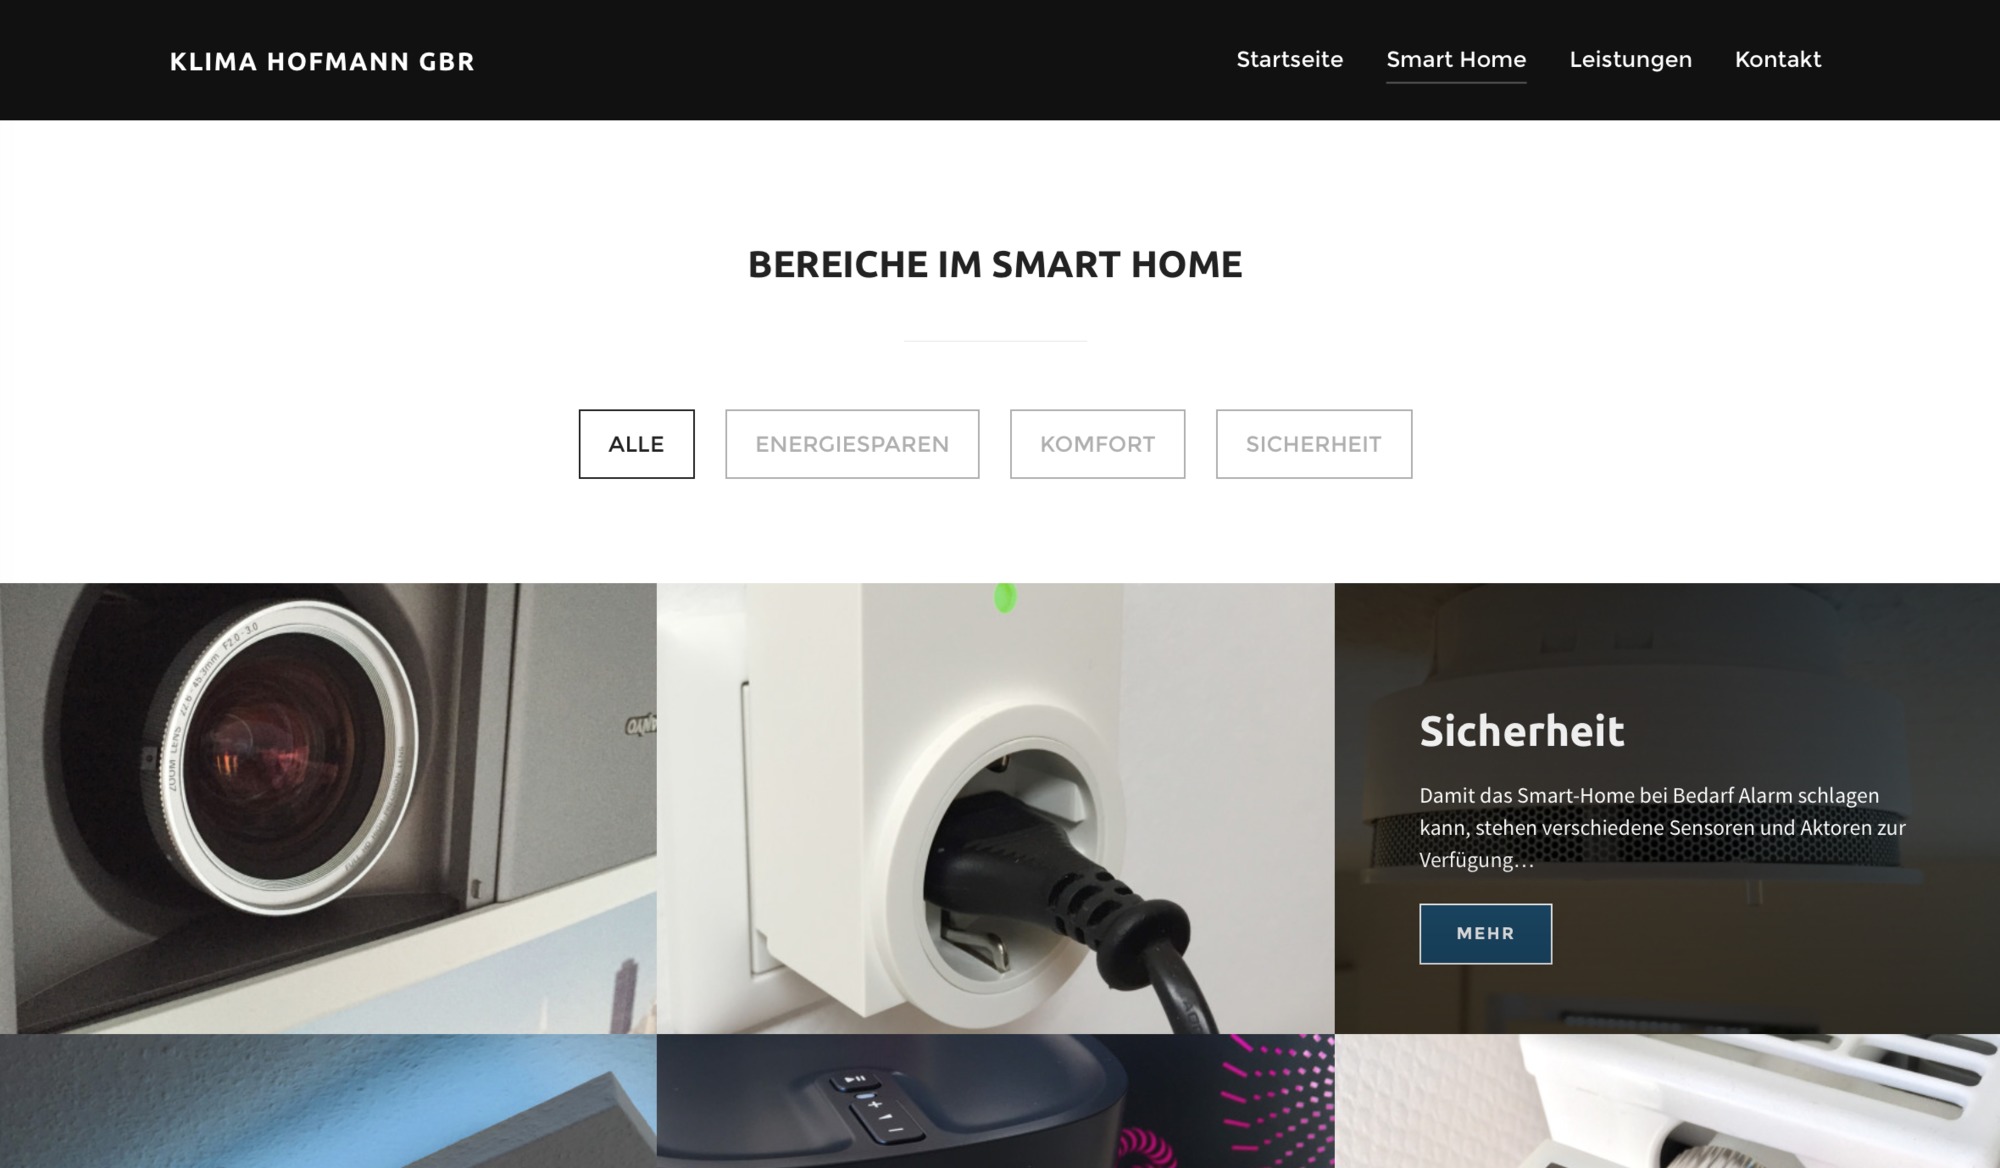 klimahofmann.de bereiche im smart home website